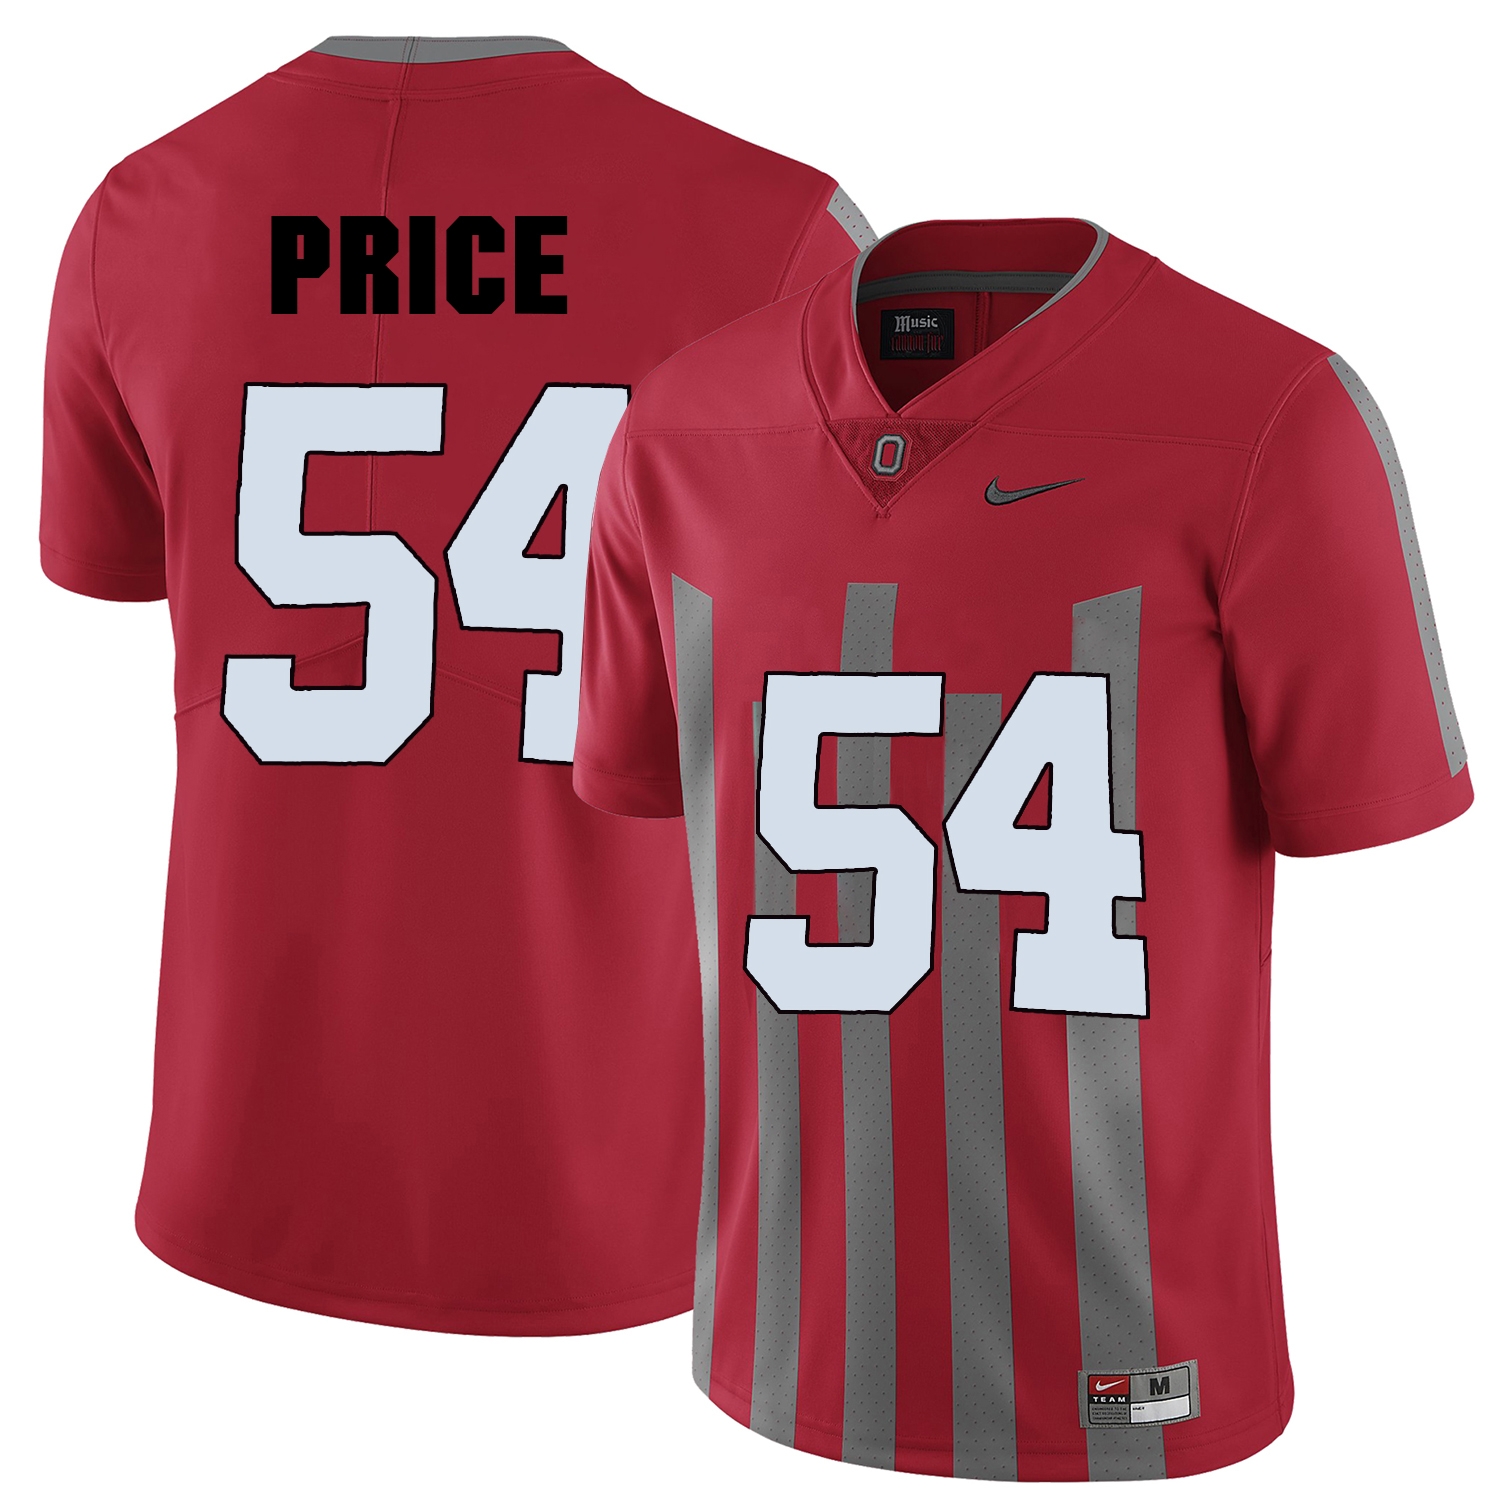 Ohio State Buckeyes Men's NCAA Billy Price #54 Red Elite College Football Jersey BPP8249FW